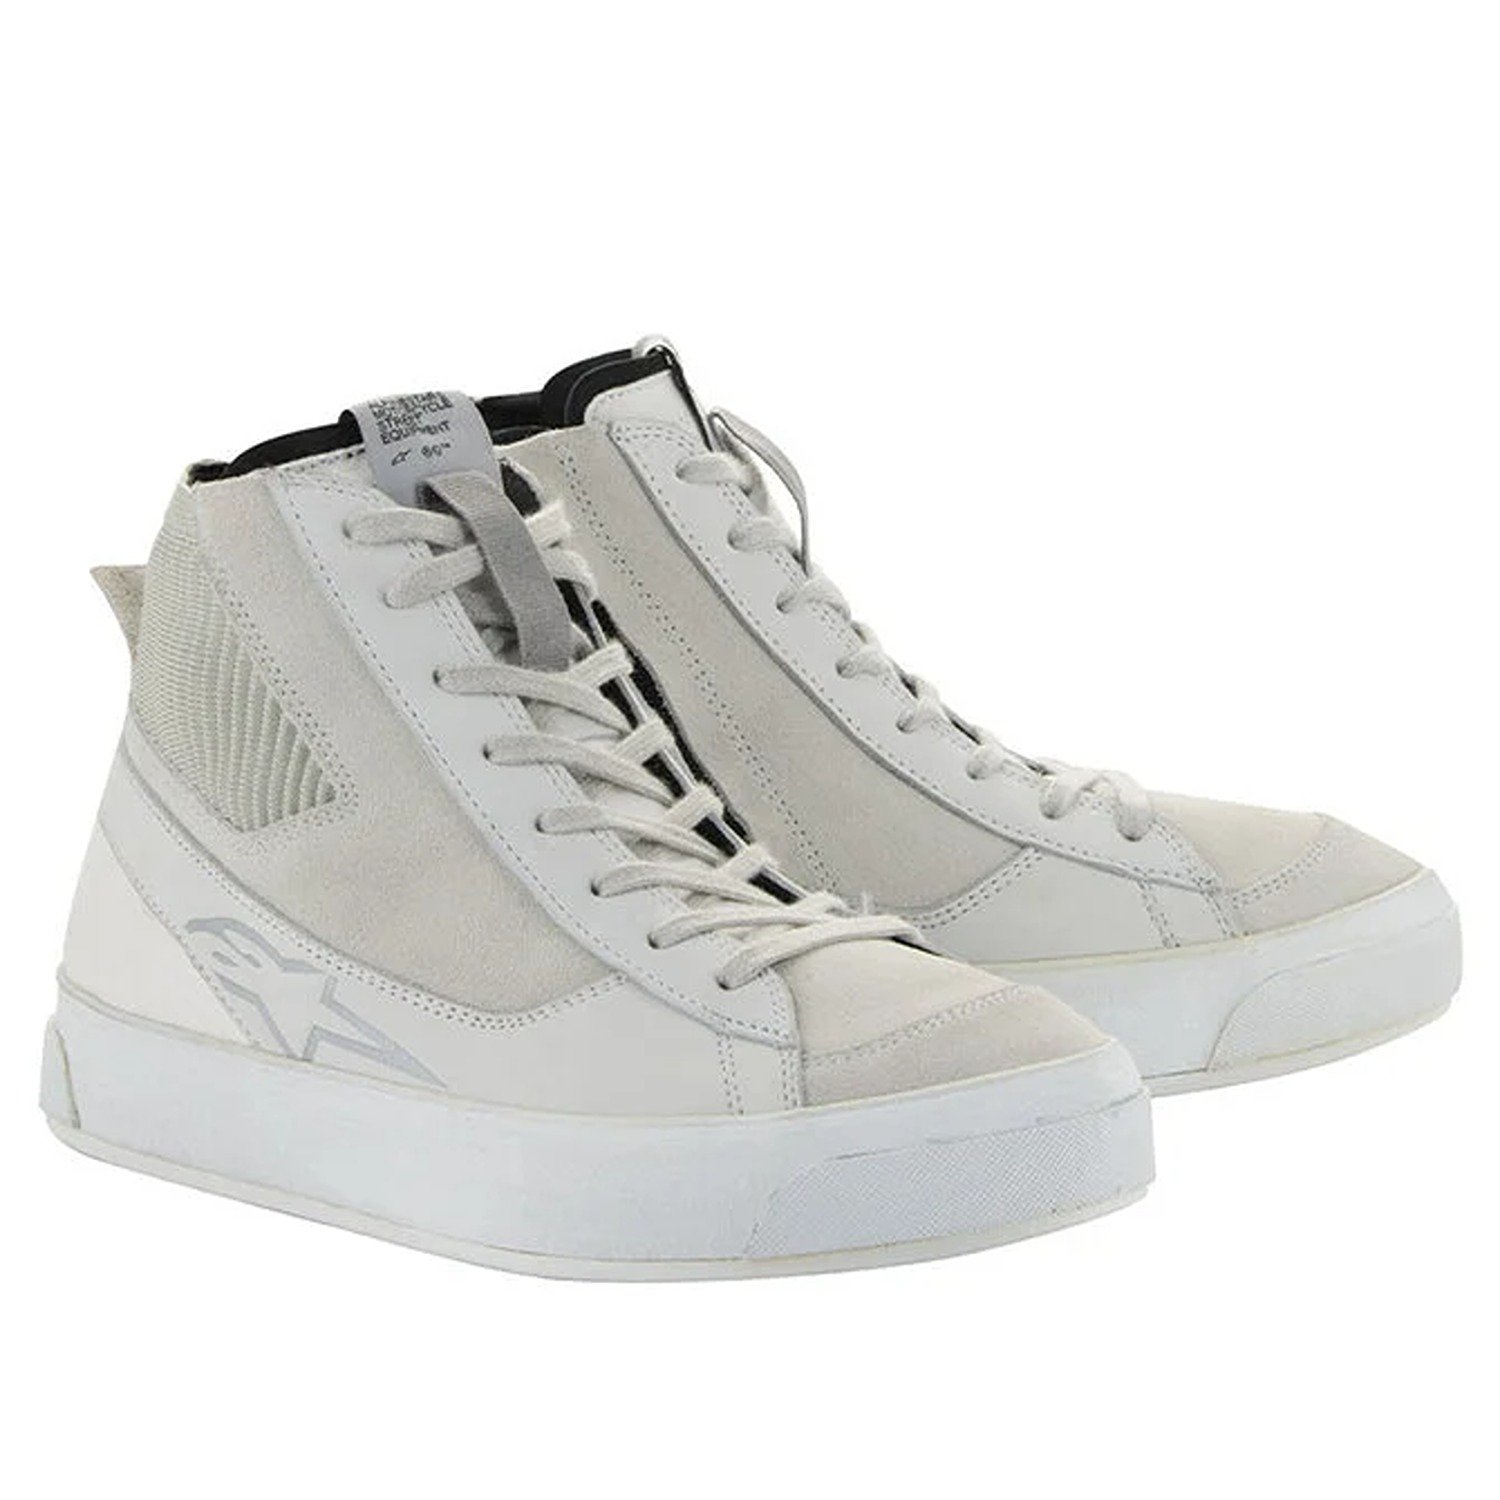 Image of Alpinestars Stella Stated Podium Shoes White Cool Gray Size US 95 ID 8059347350172